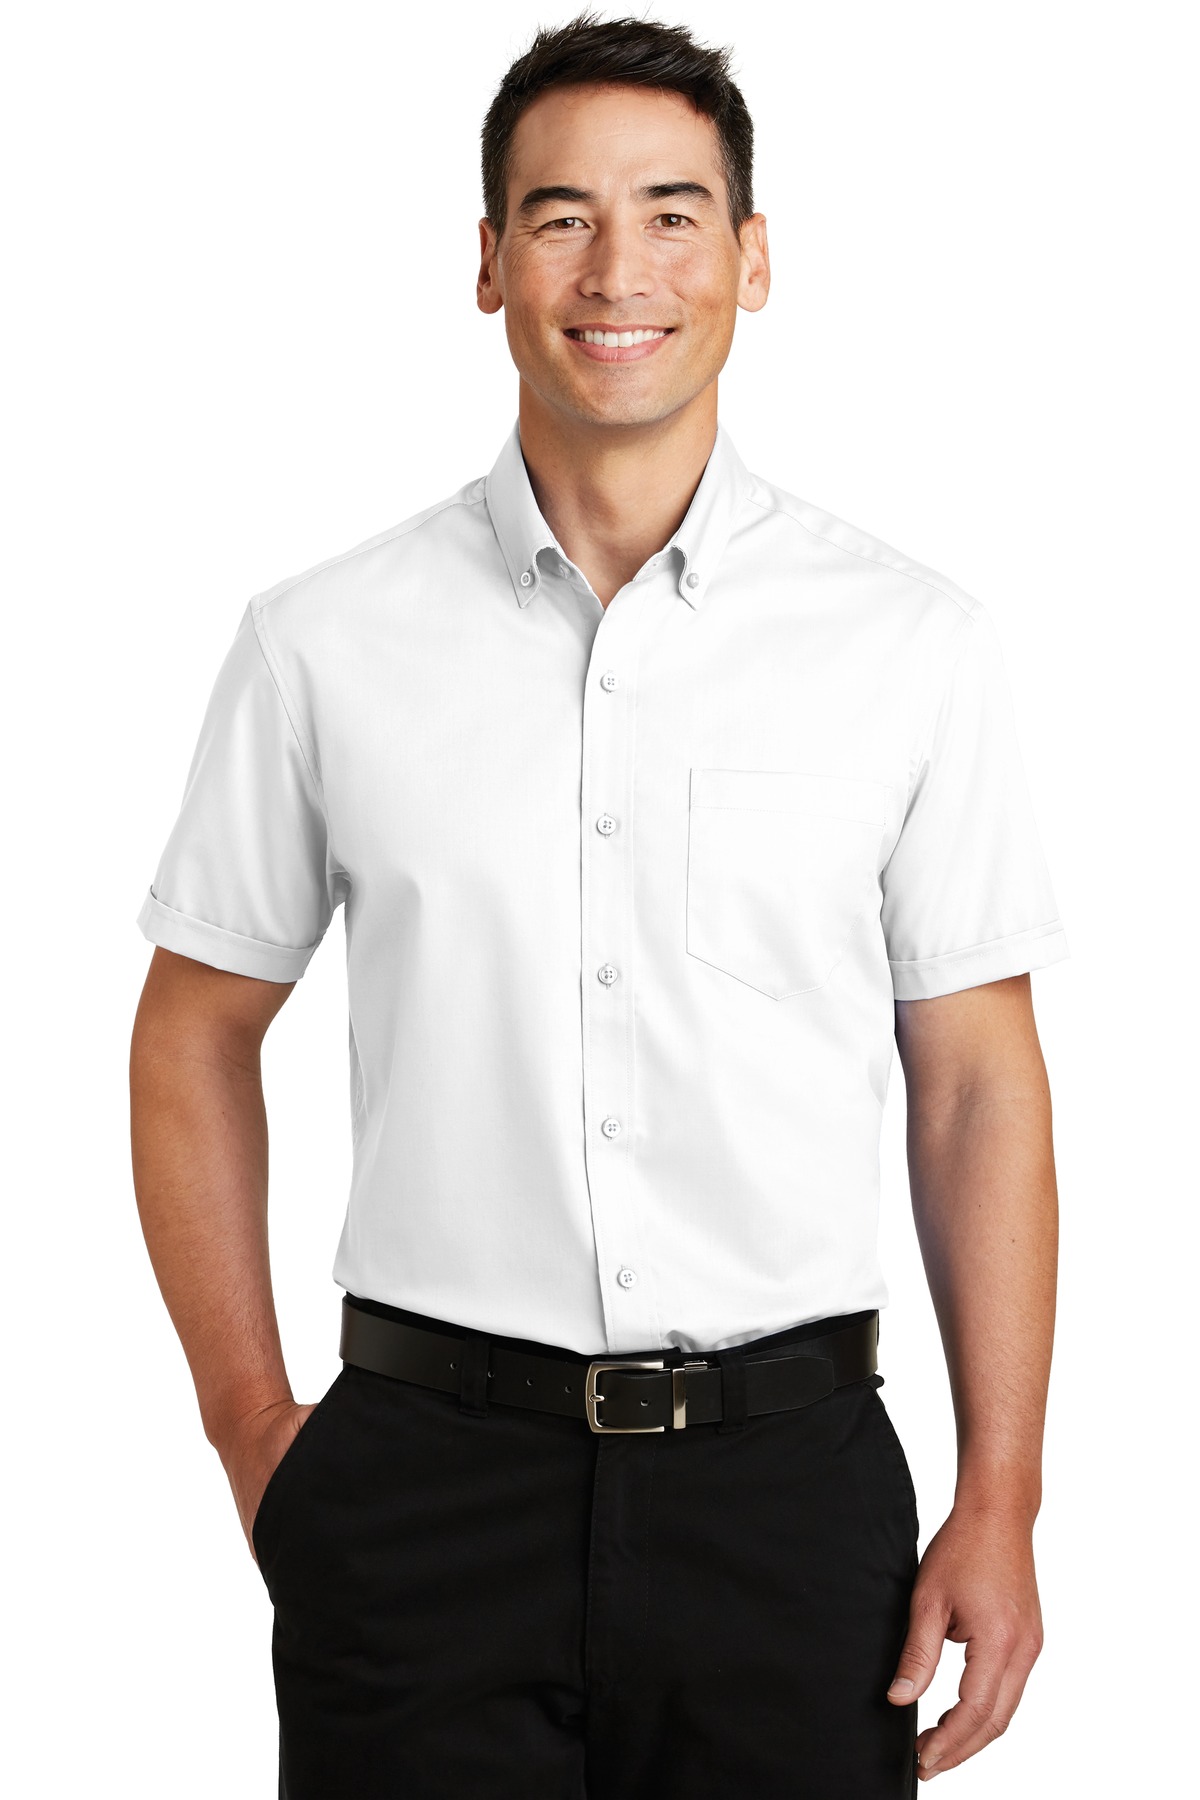 Port Authority Short Sleeve SuperPro Twill Shirt. S664